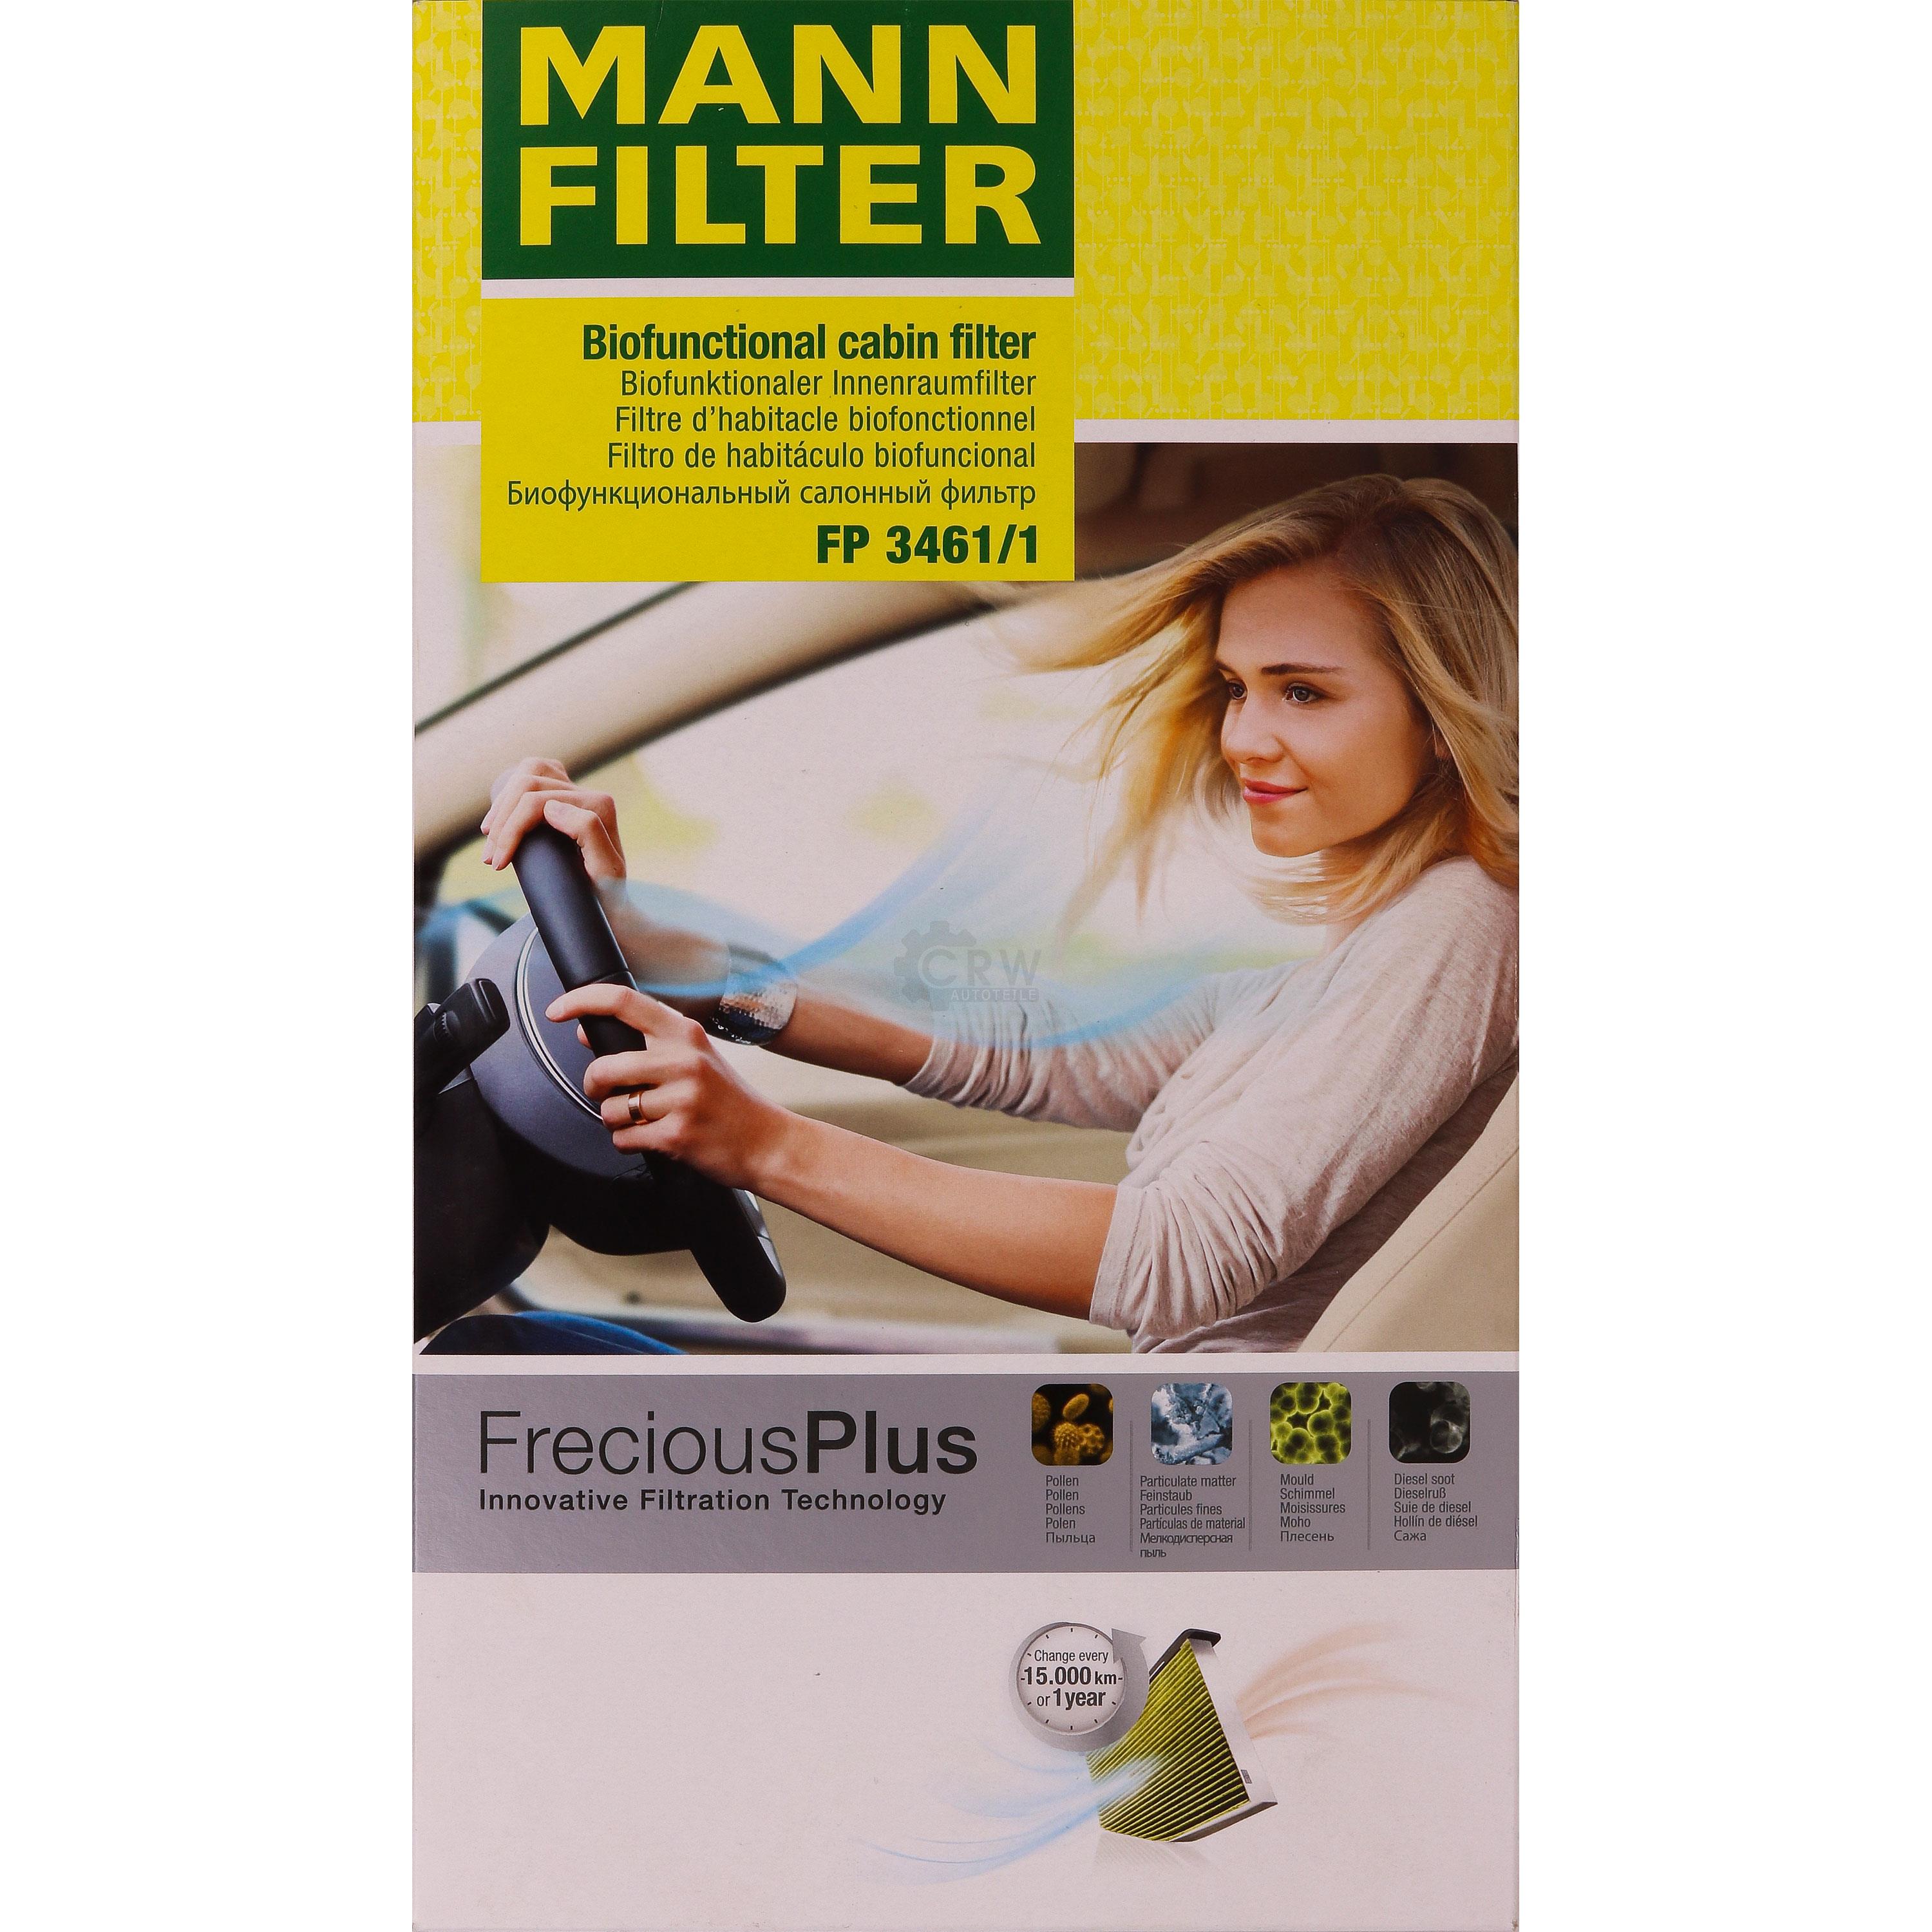 MANN-Filter Innenraumfilter Biofunctional für Allergiker FP 3461/1